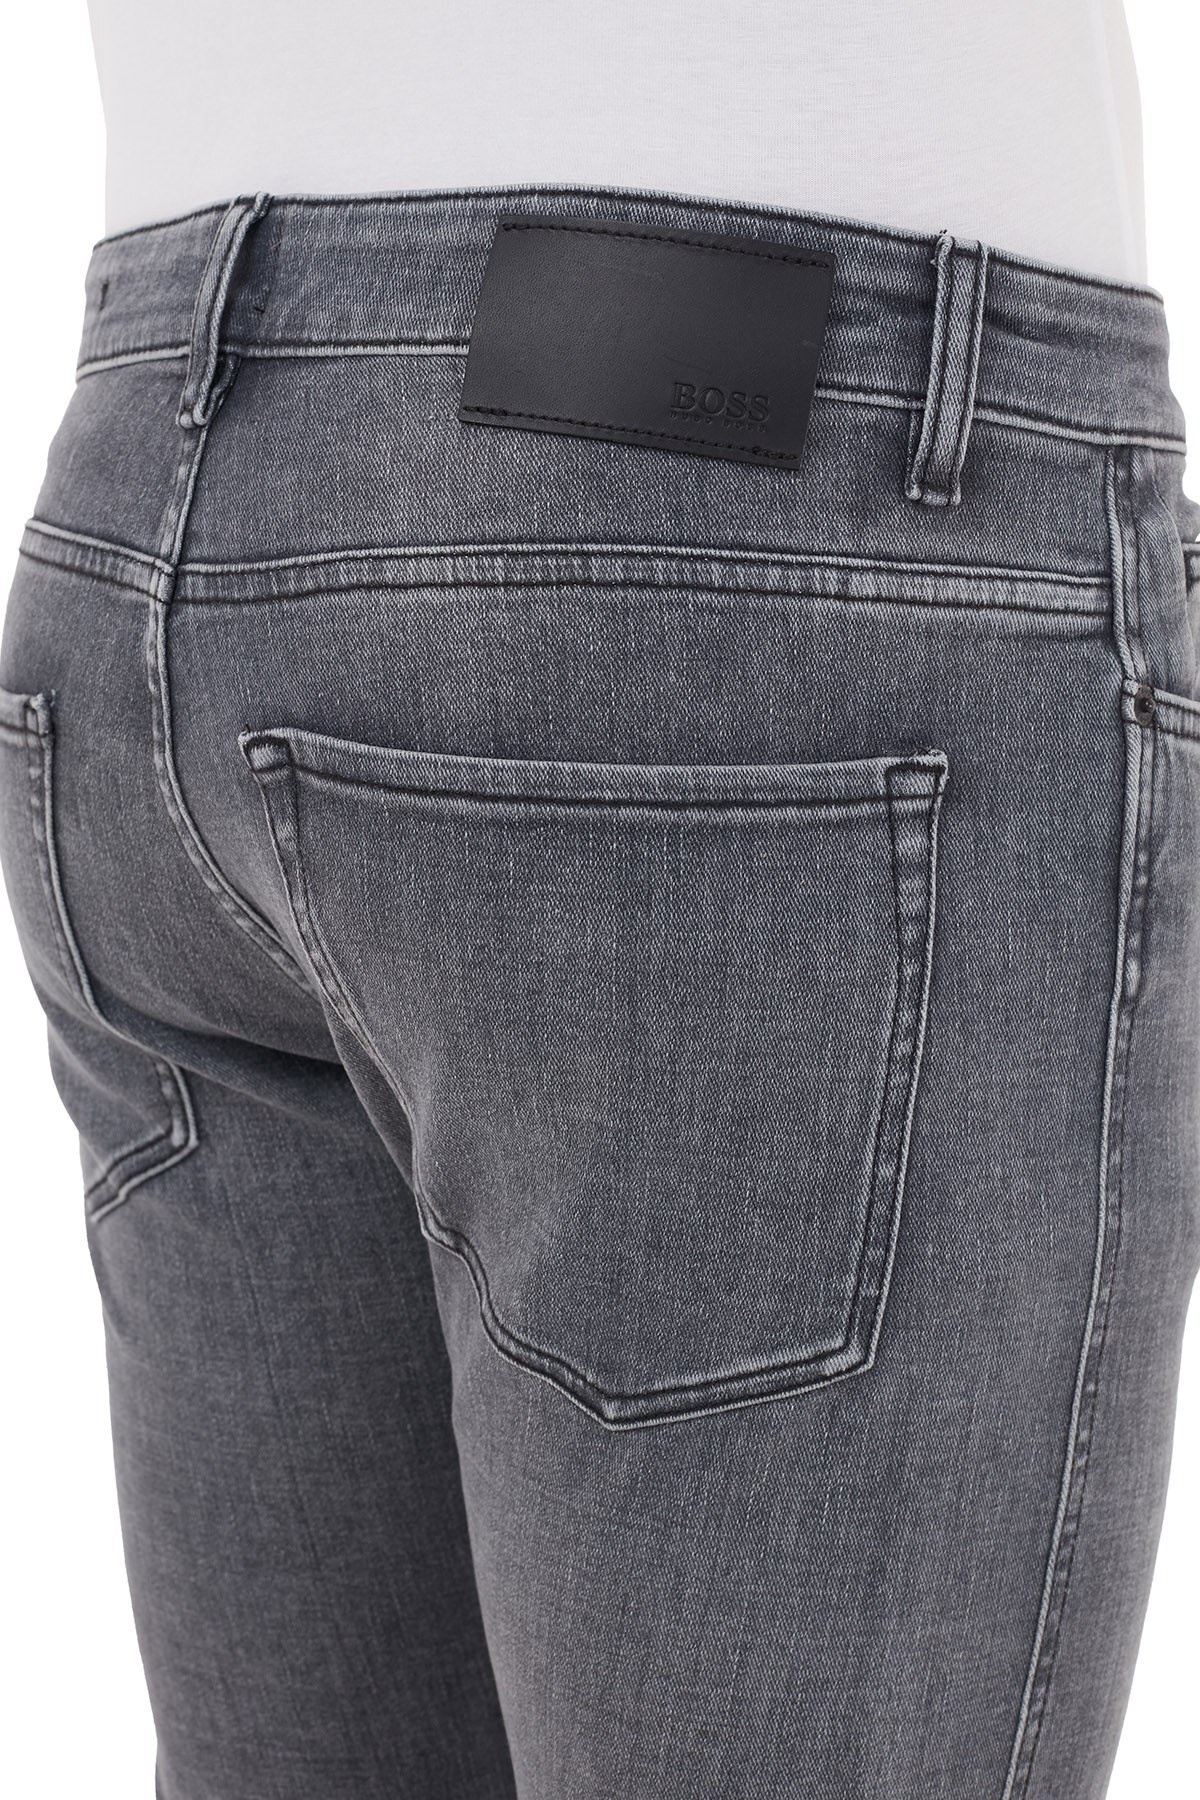 Hugo Boss Slim Fit Dar Paça Pamuklu Jeans Erkek Kot Pantolon 50438765 030 GRİ